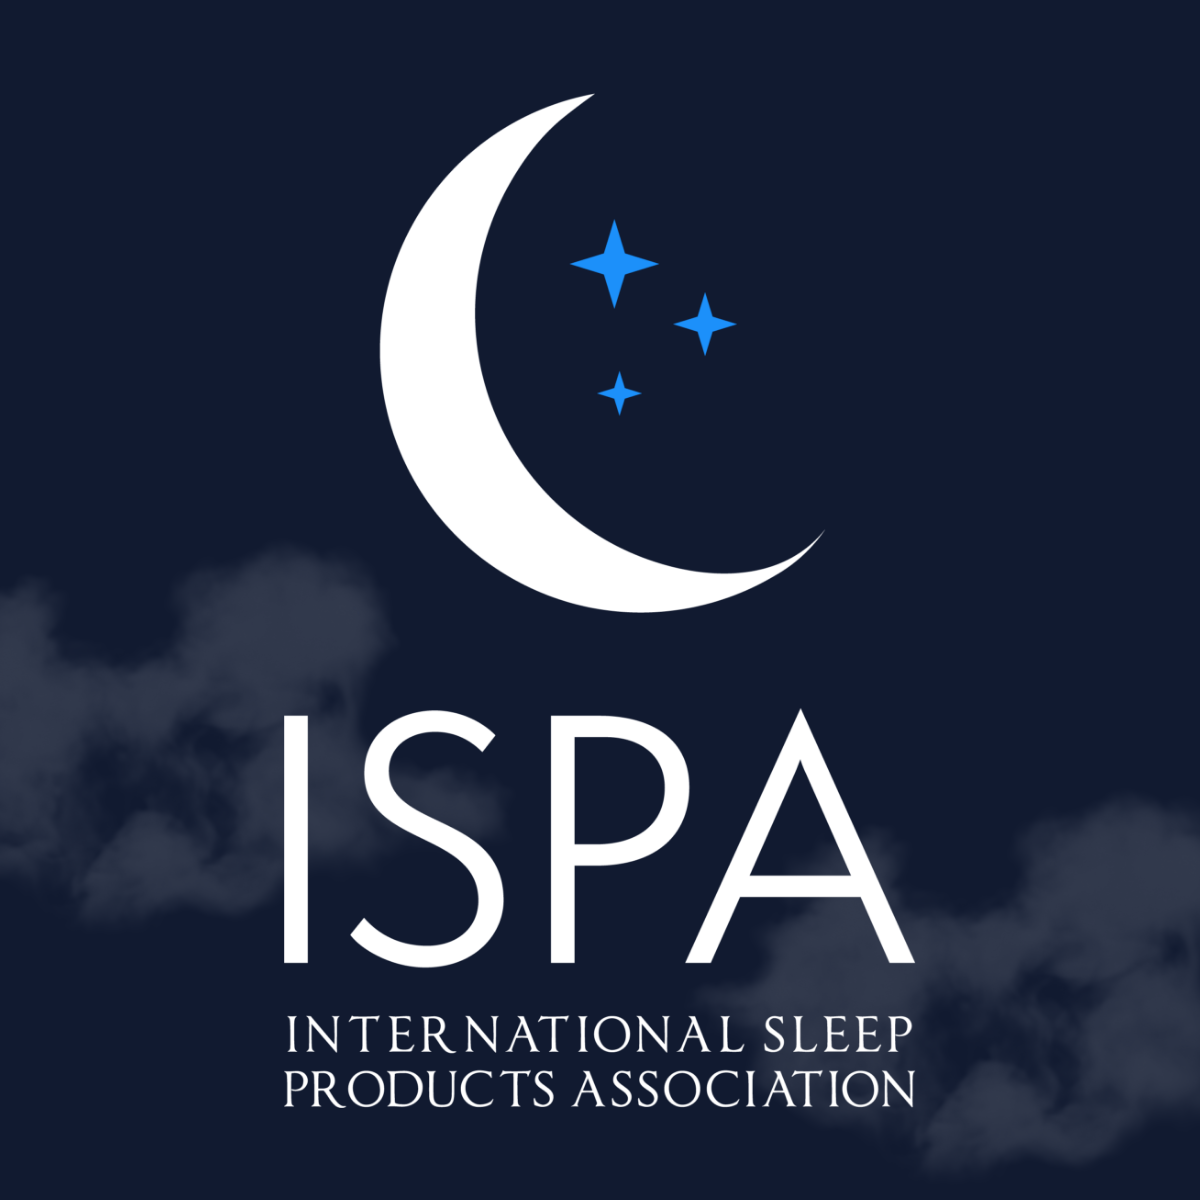 ISPA Featured image logo